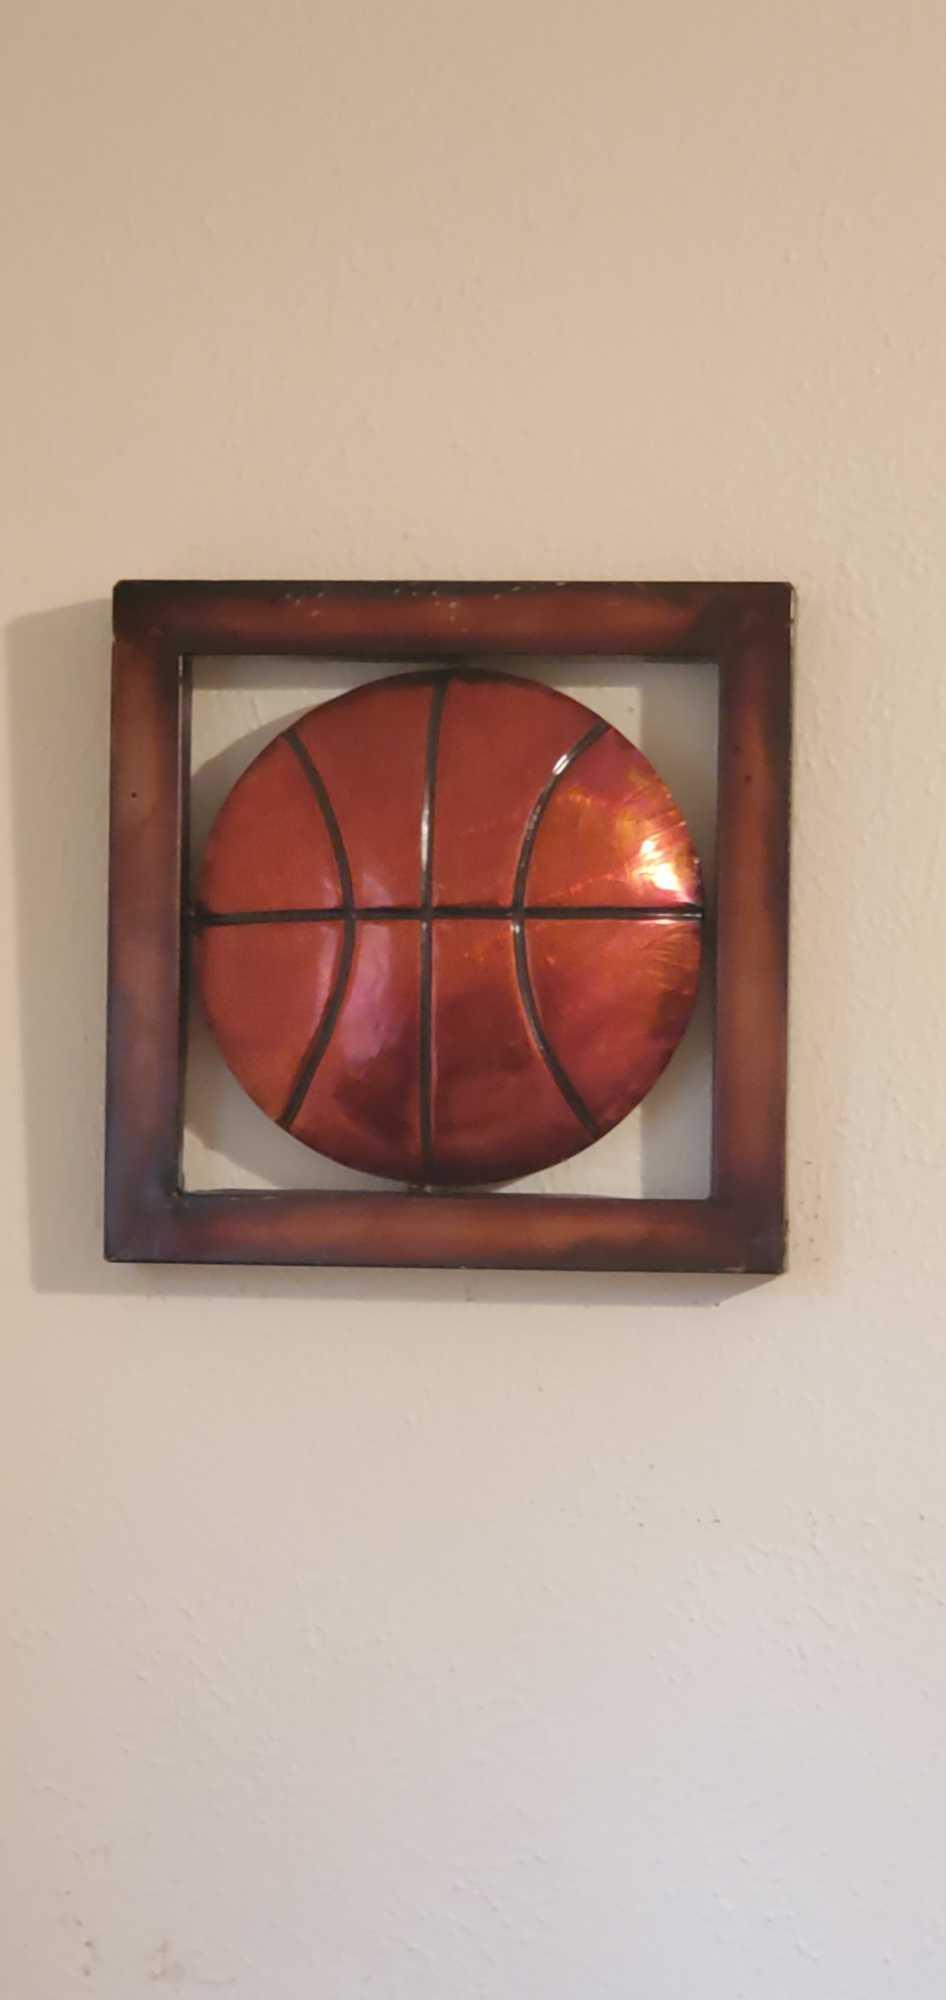 U- Wicker Headboard, Bed Frame, (2) Tables, (2) Lamp, Framed Metal Basketball